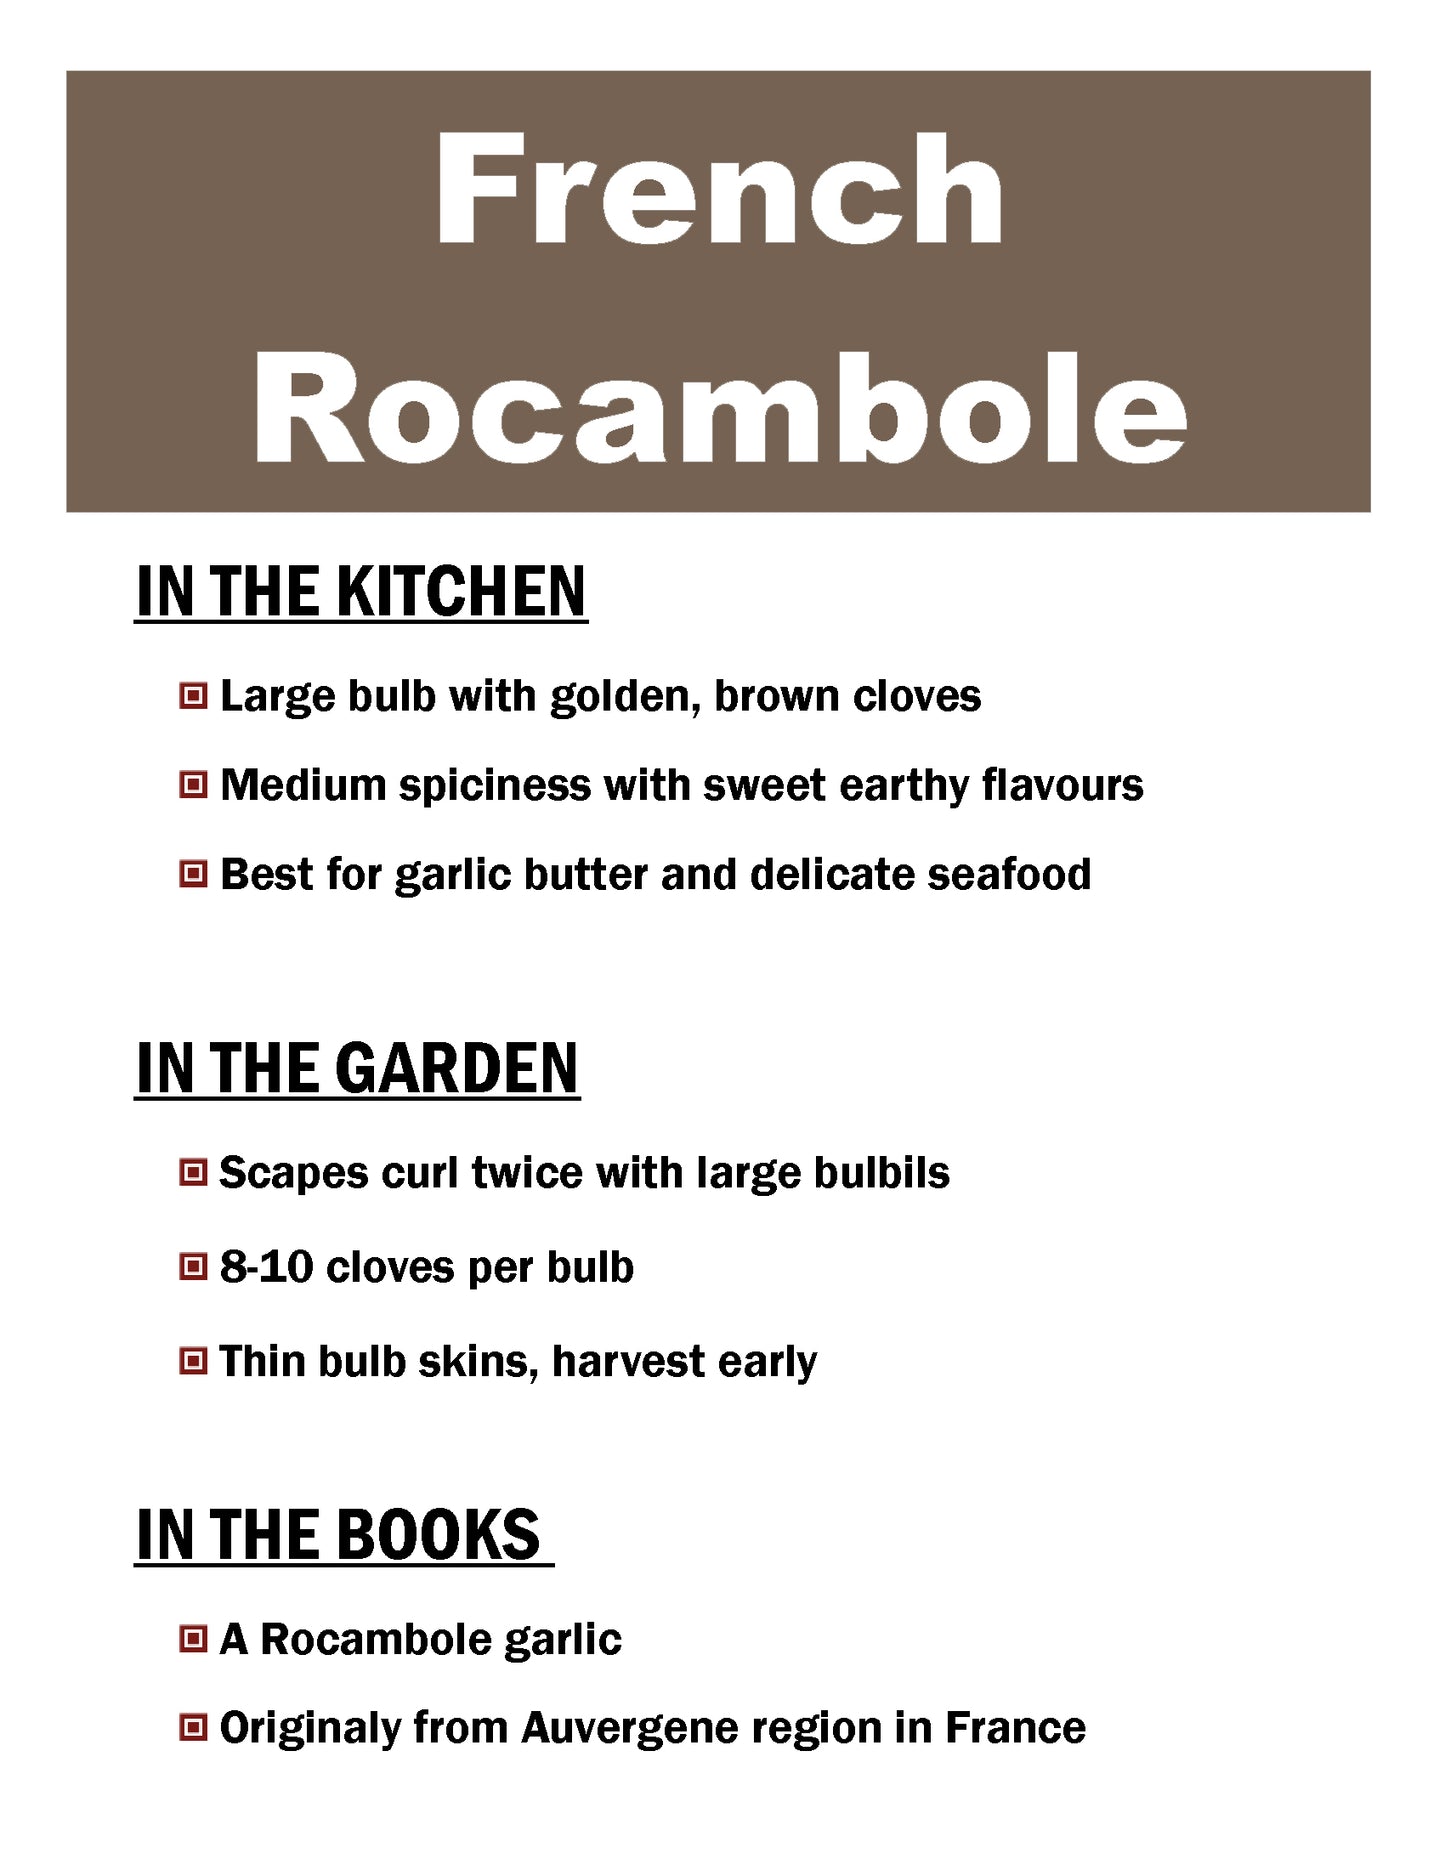 French Rocambole garlic description card by Garlicloves